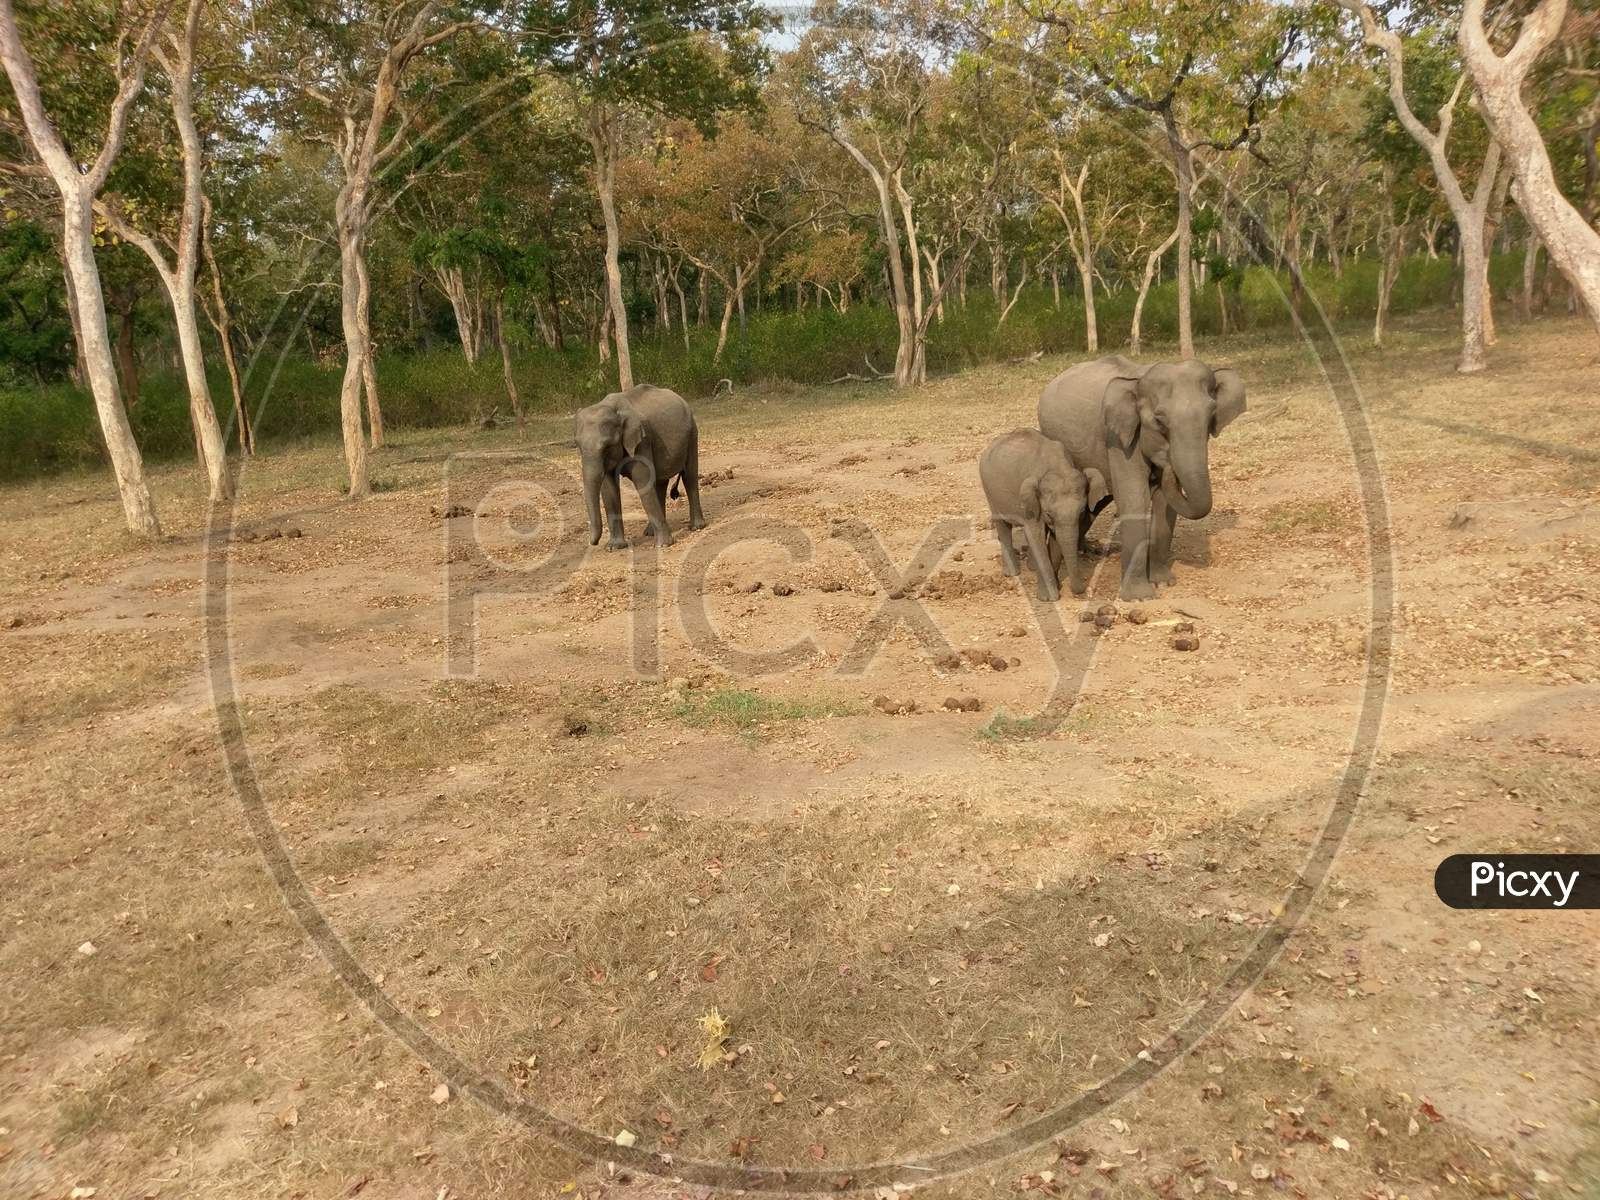 Elephants in the bandipur national park Karnataka, India